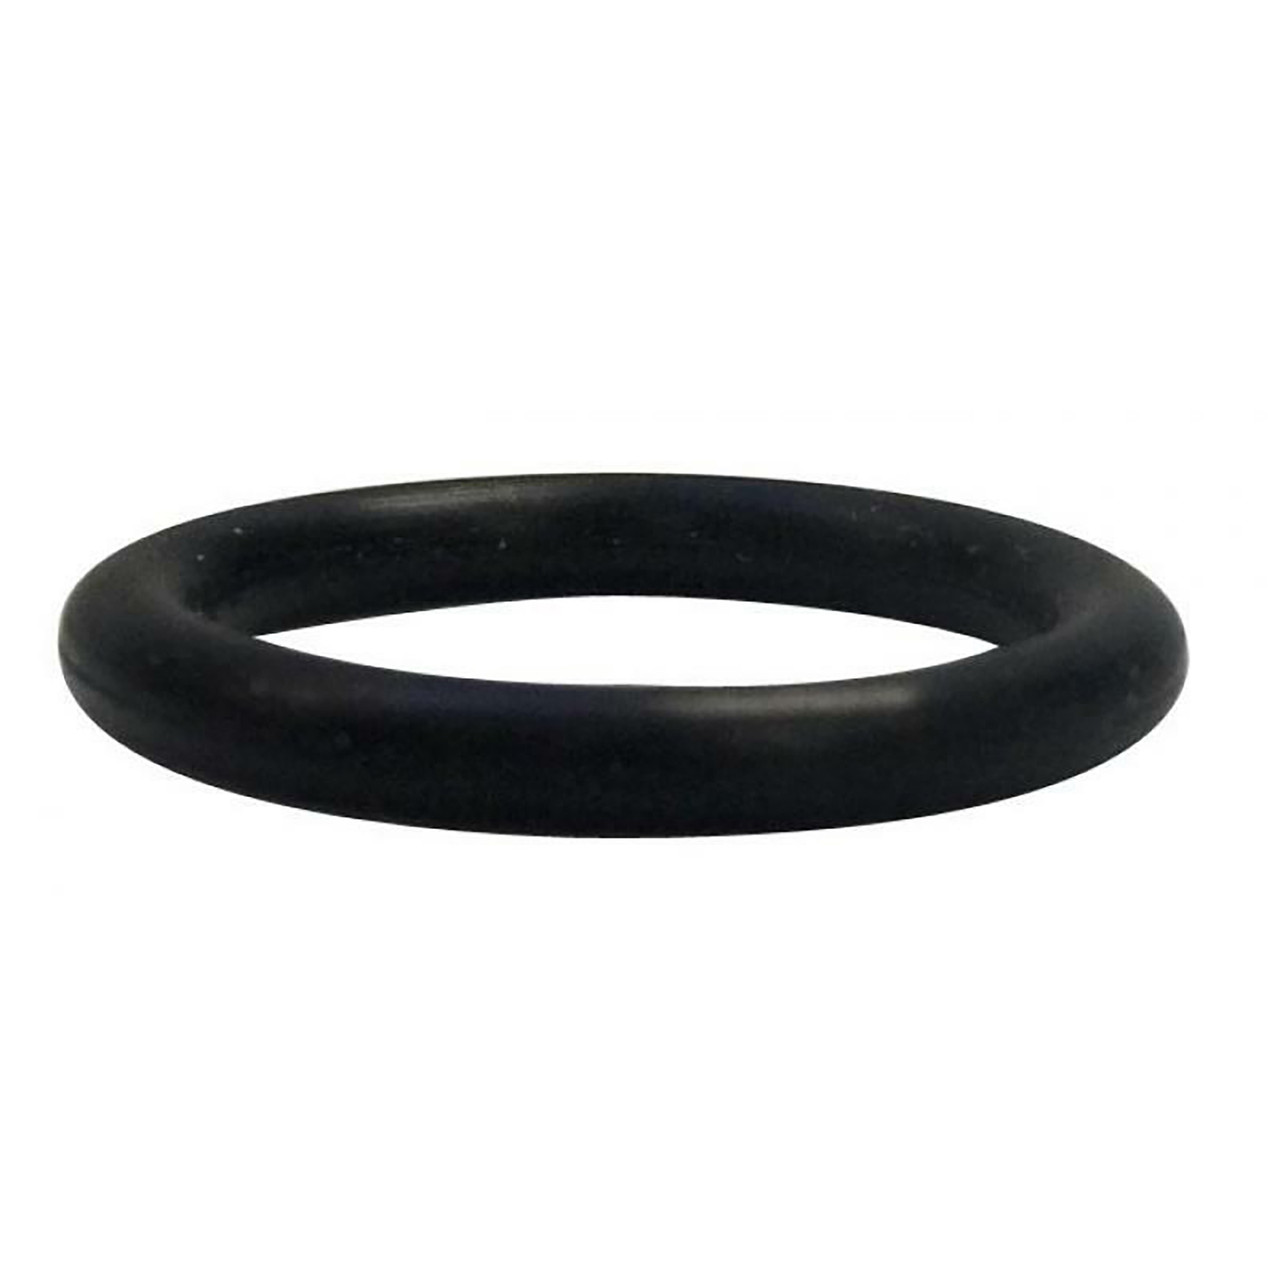 Imusa B120-391 Aluminium Stovetop Replacement Rubber Ring